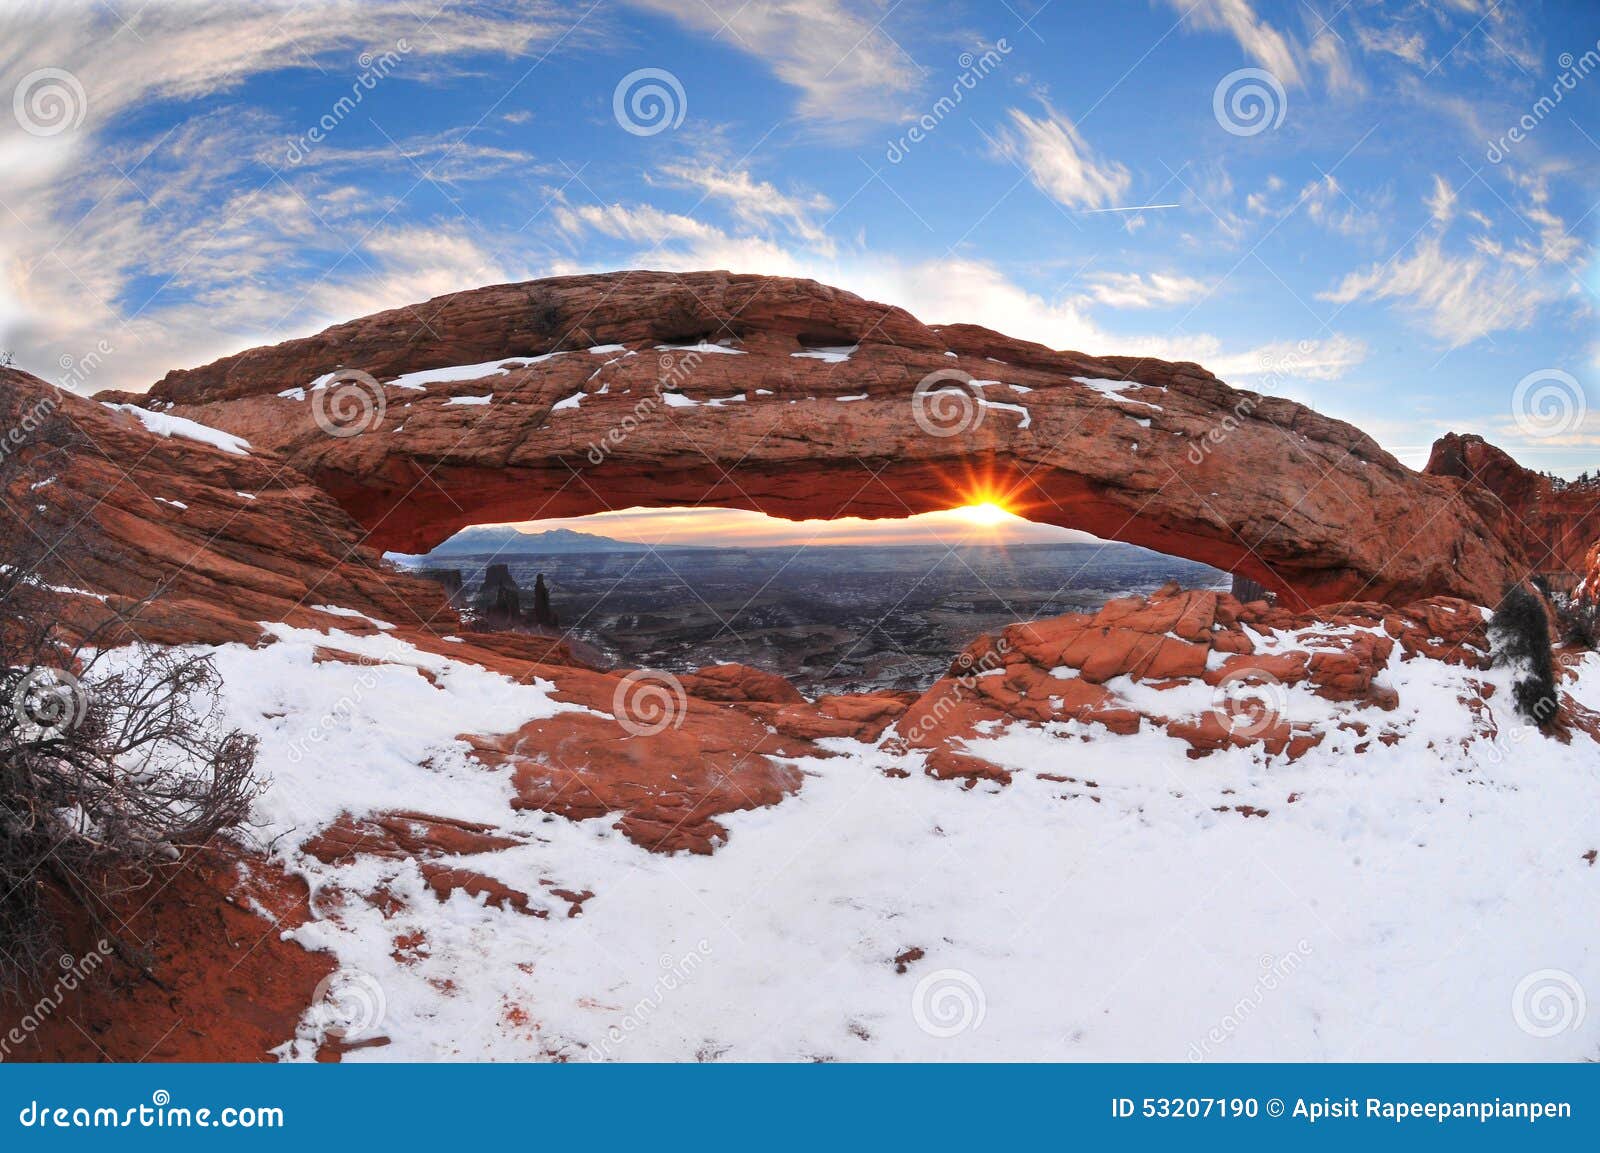 winter sunrise at mesa arch